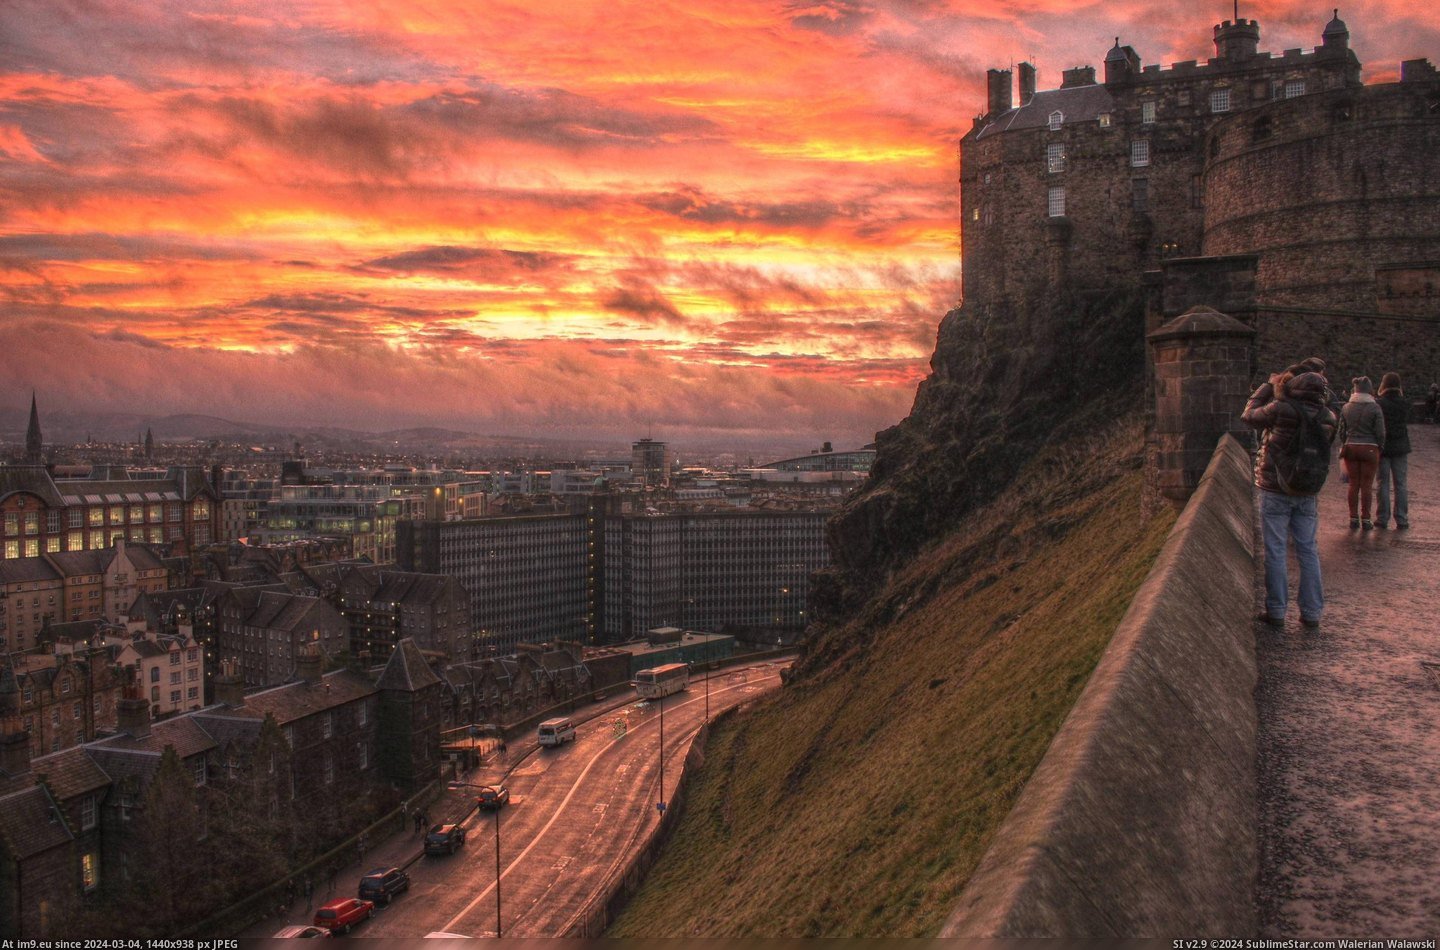 #Scotland  #Edinburgh [Pics] Edinburgh, Scotland Pic. (Image of album My r/PICS favs))